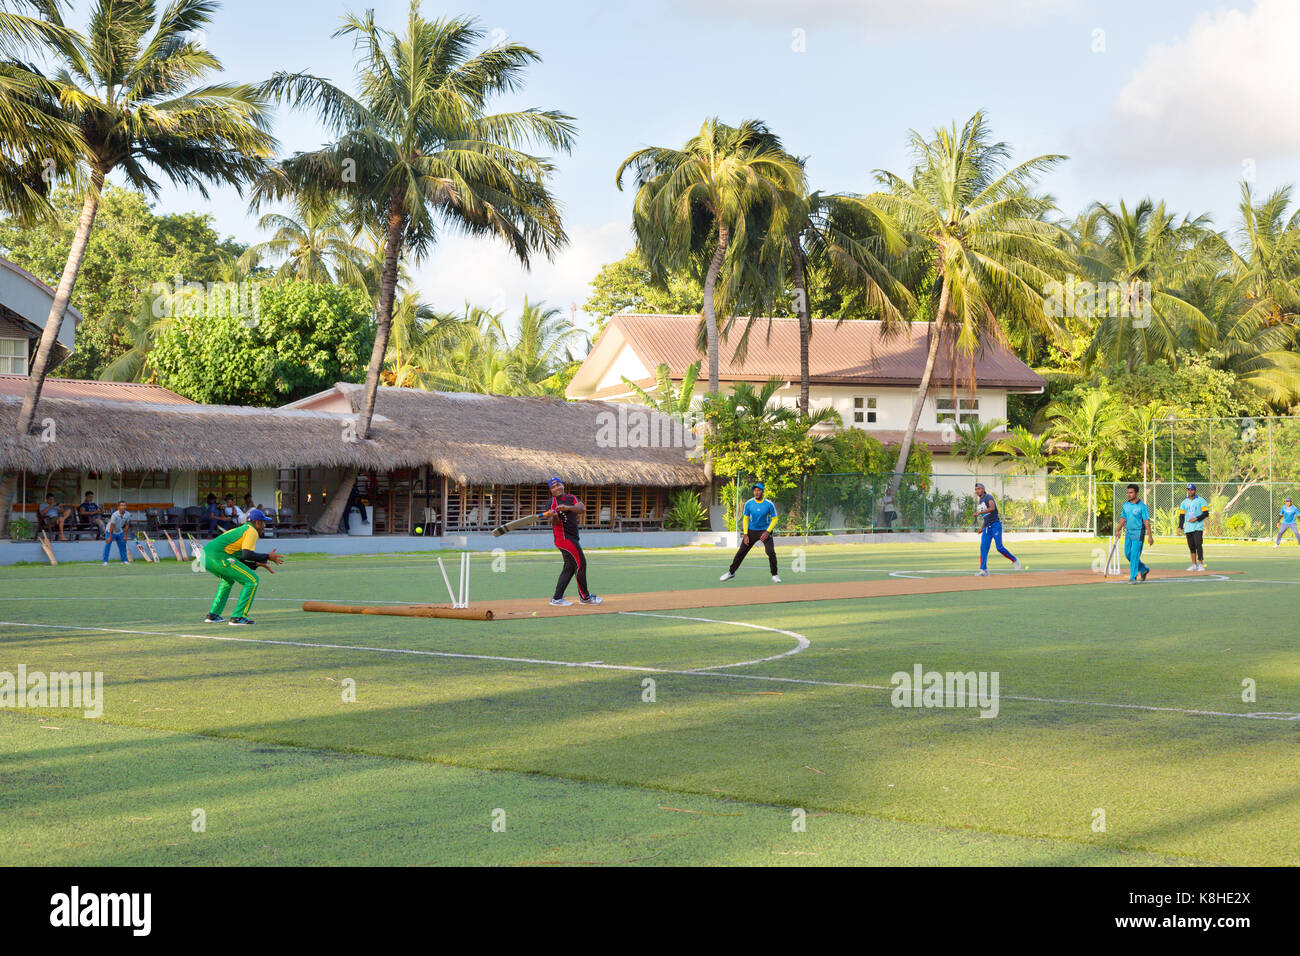 Local people playing cricket, Kuramathi island, The Maldives, Asia Stock Photo